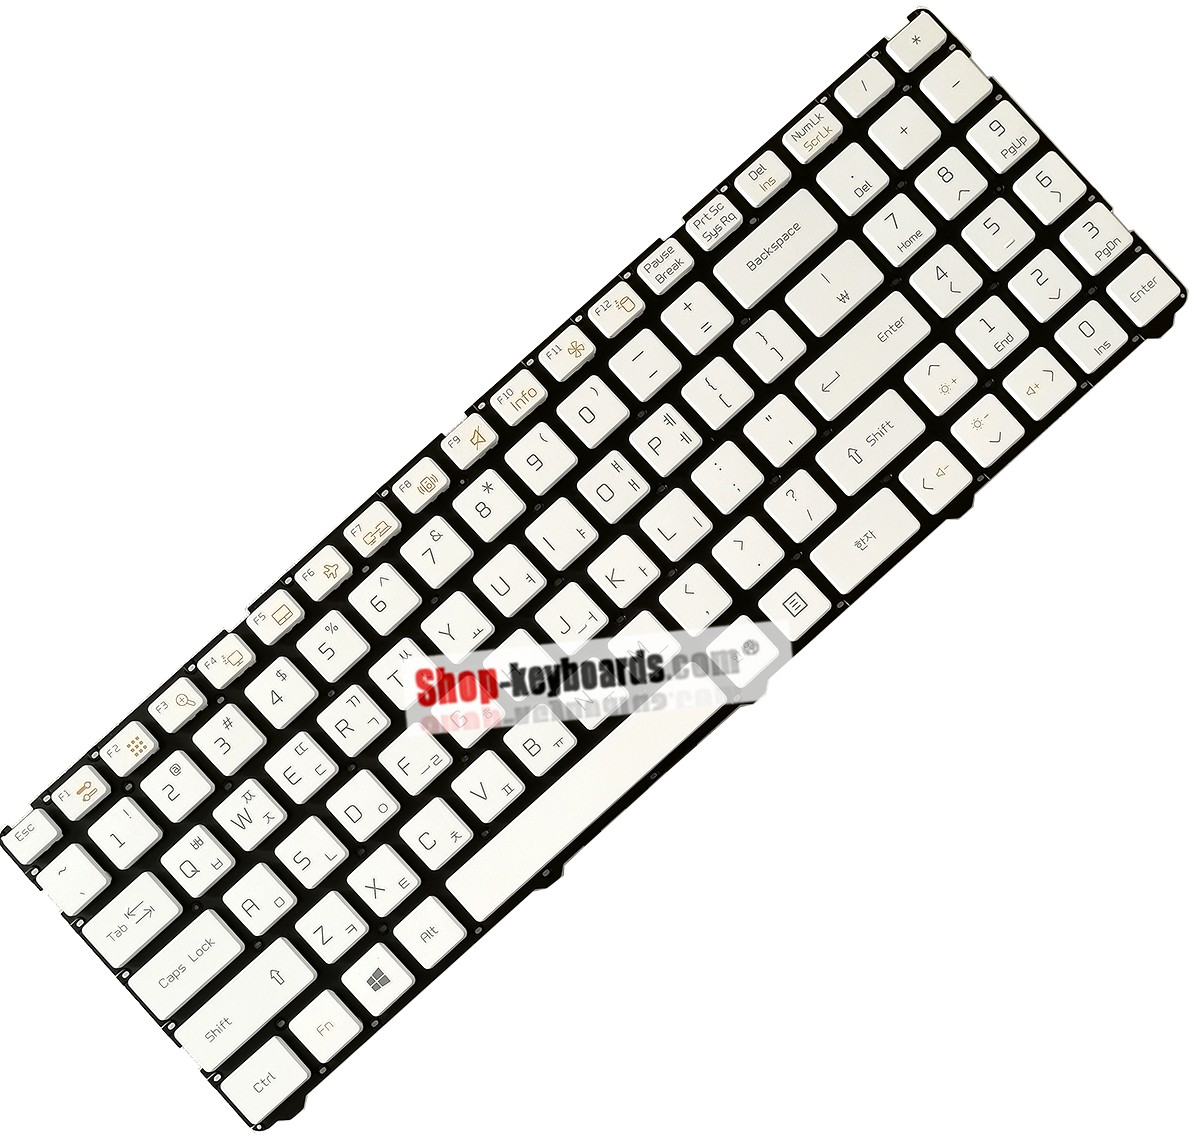 LG AELG9E00020 Keyboard replacement